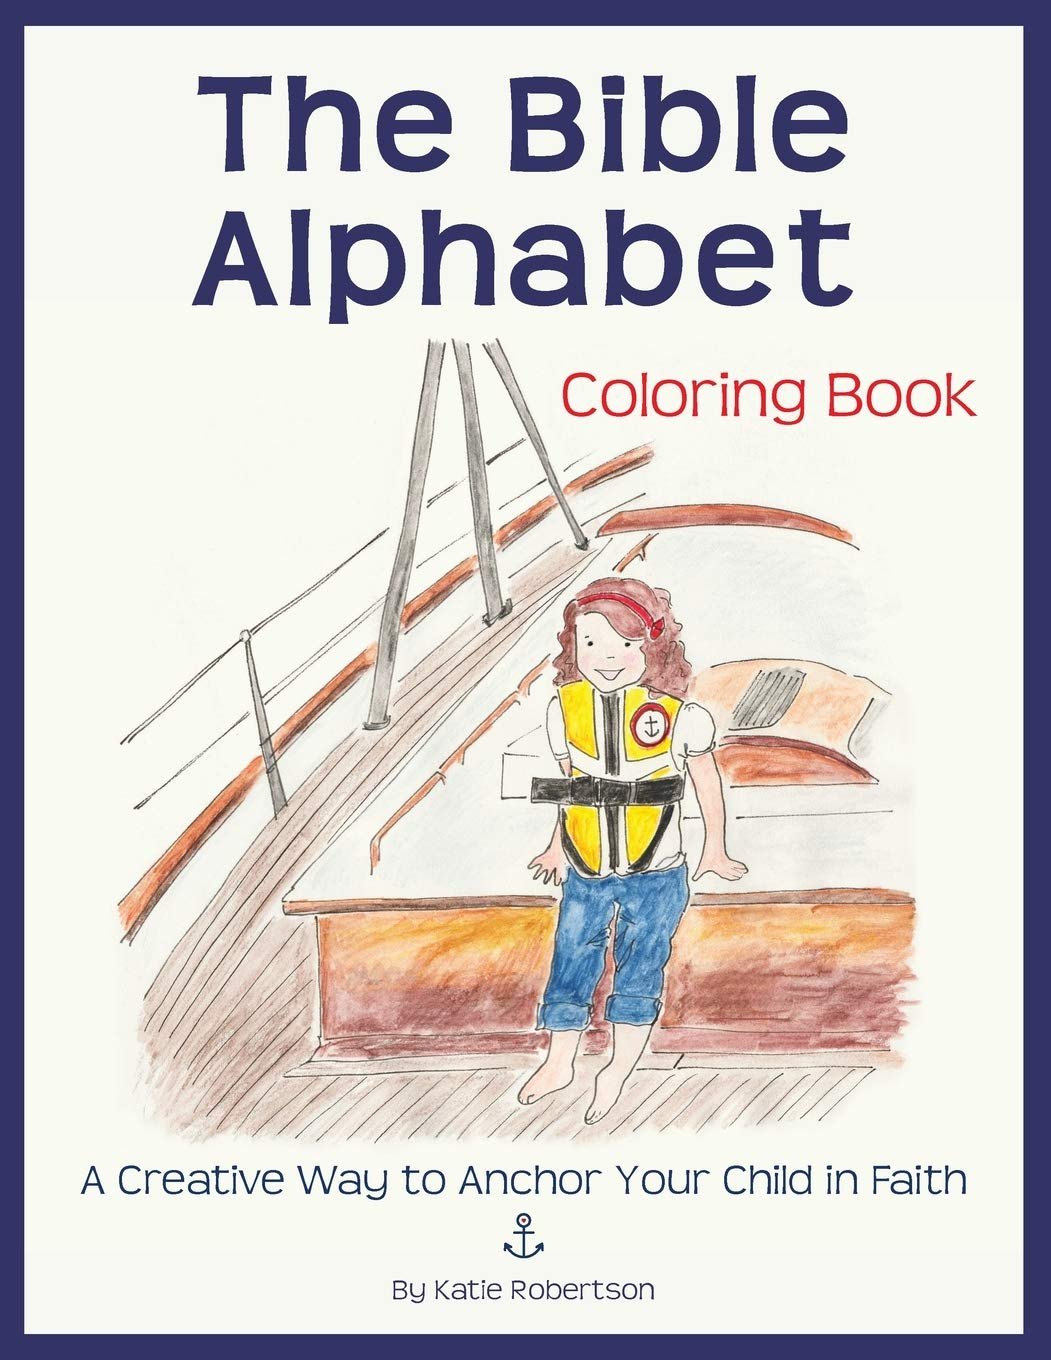 The Bible Alphabet Coloring Book.jpg